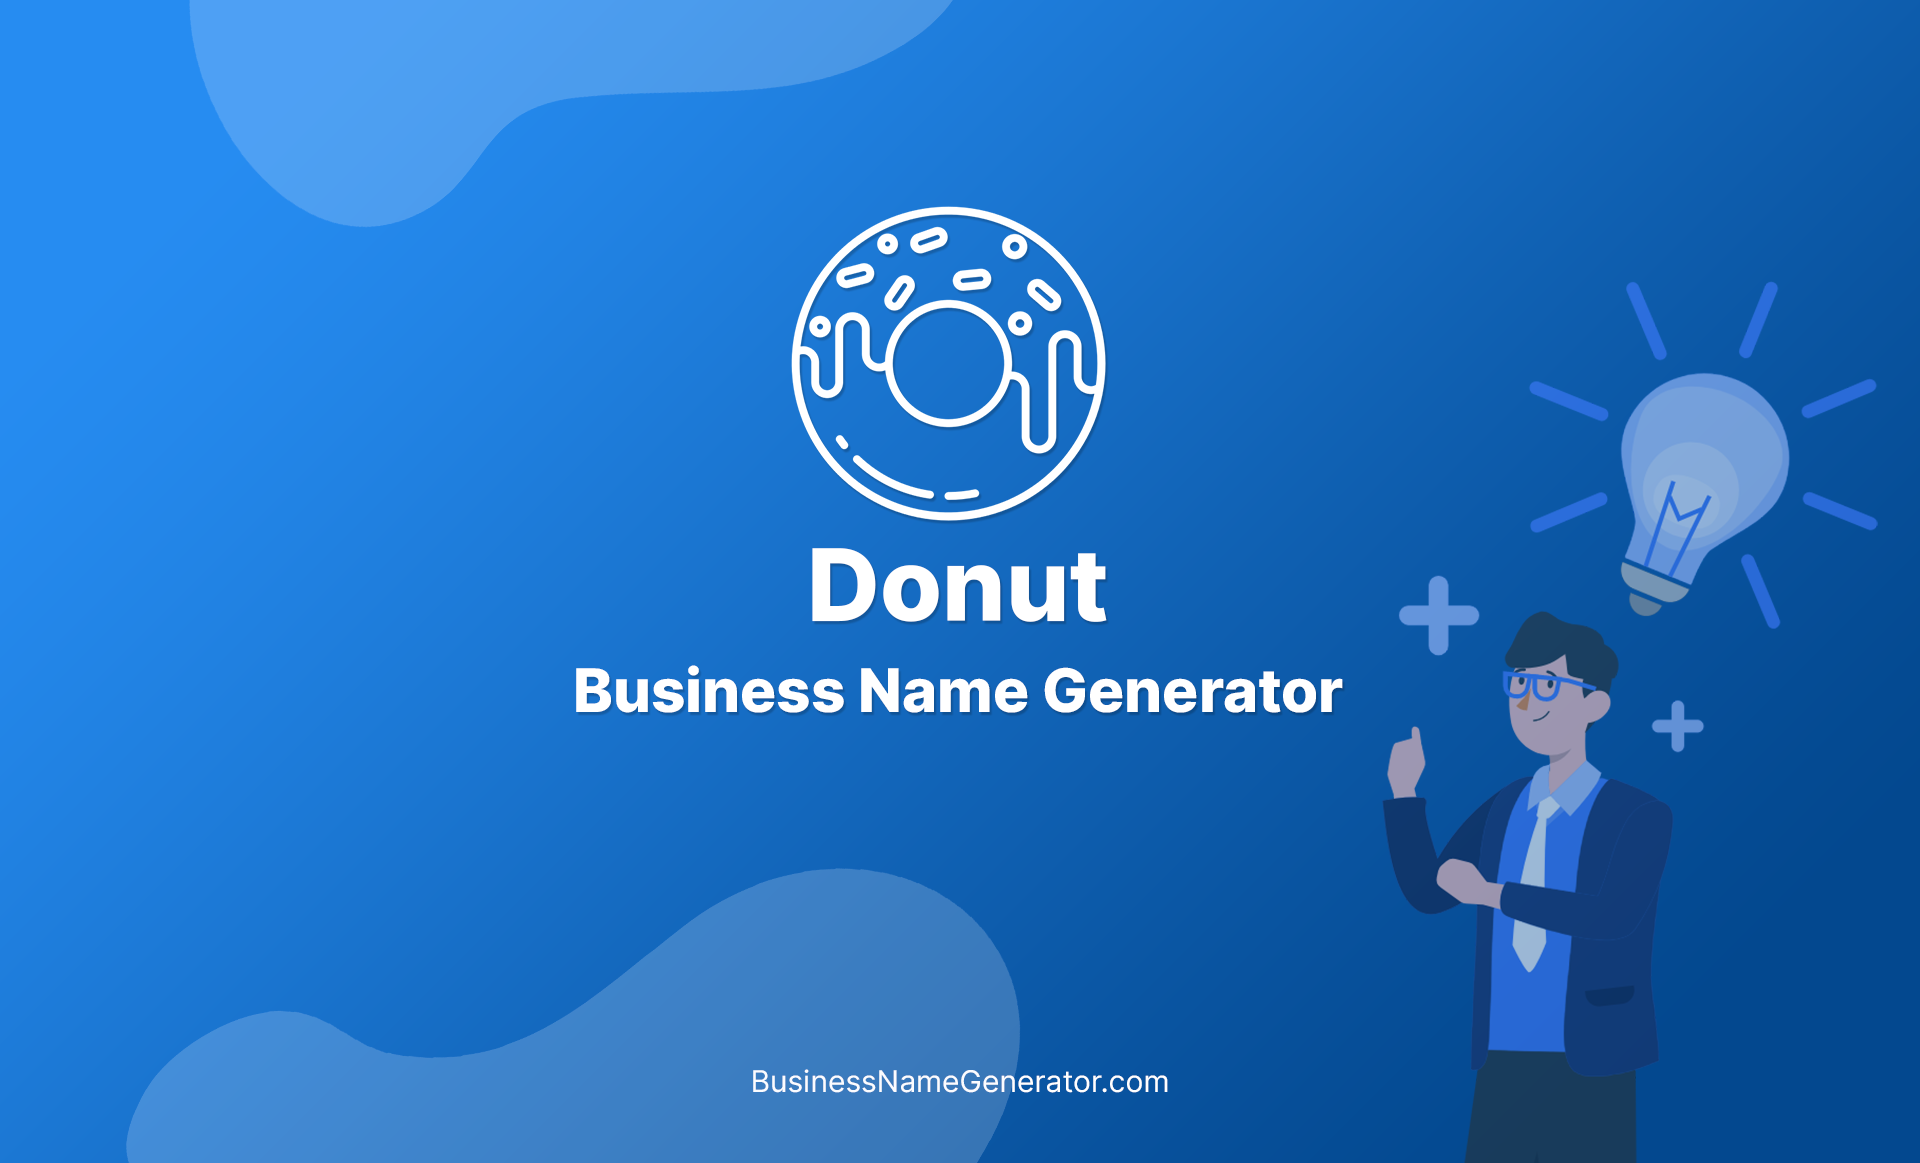 Donut Business Name Generator